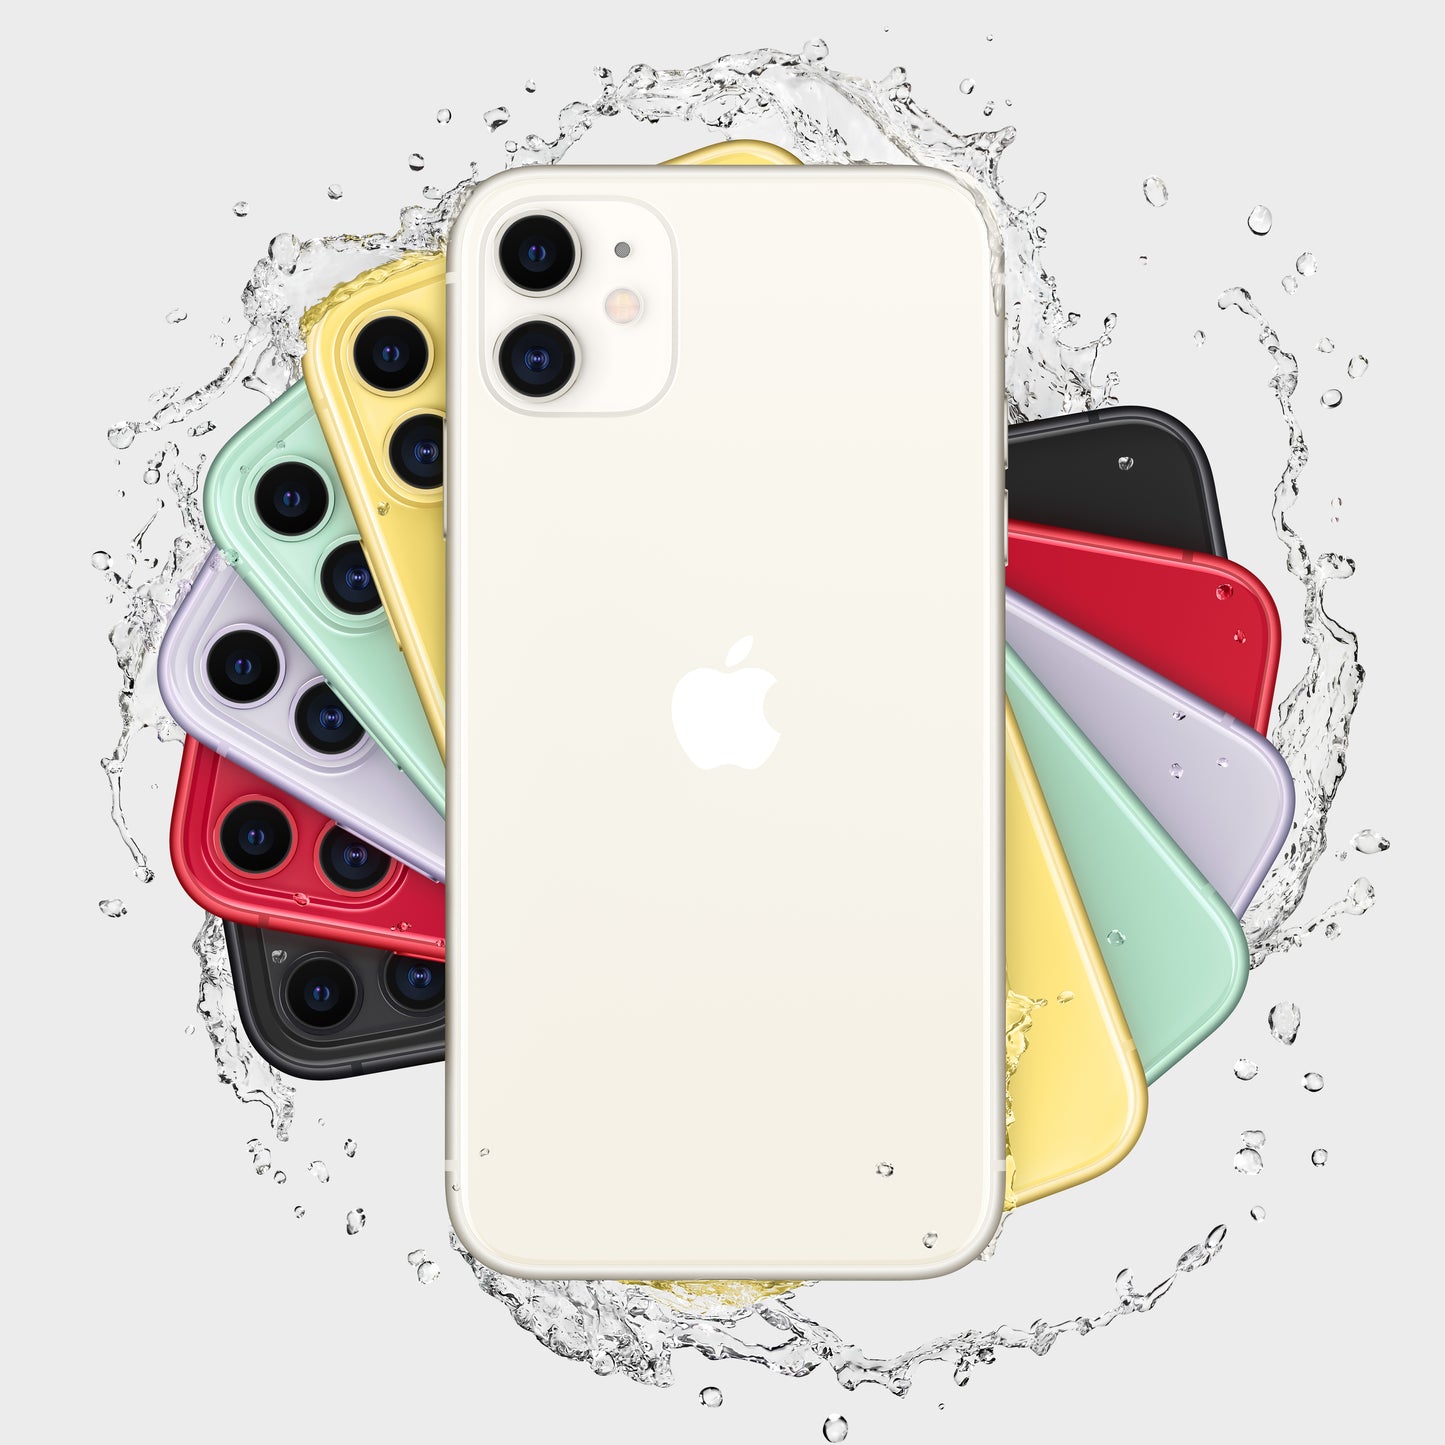 iPhone 11, Blanco, 128 GB - Rossellimac